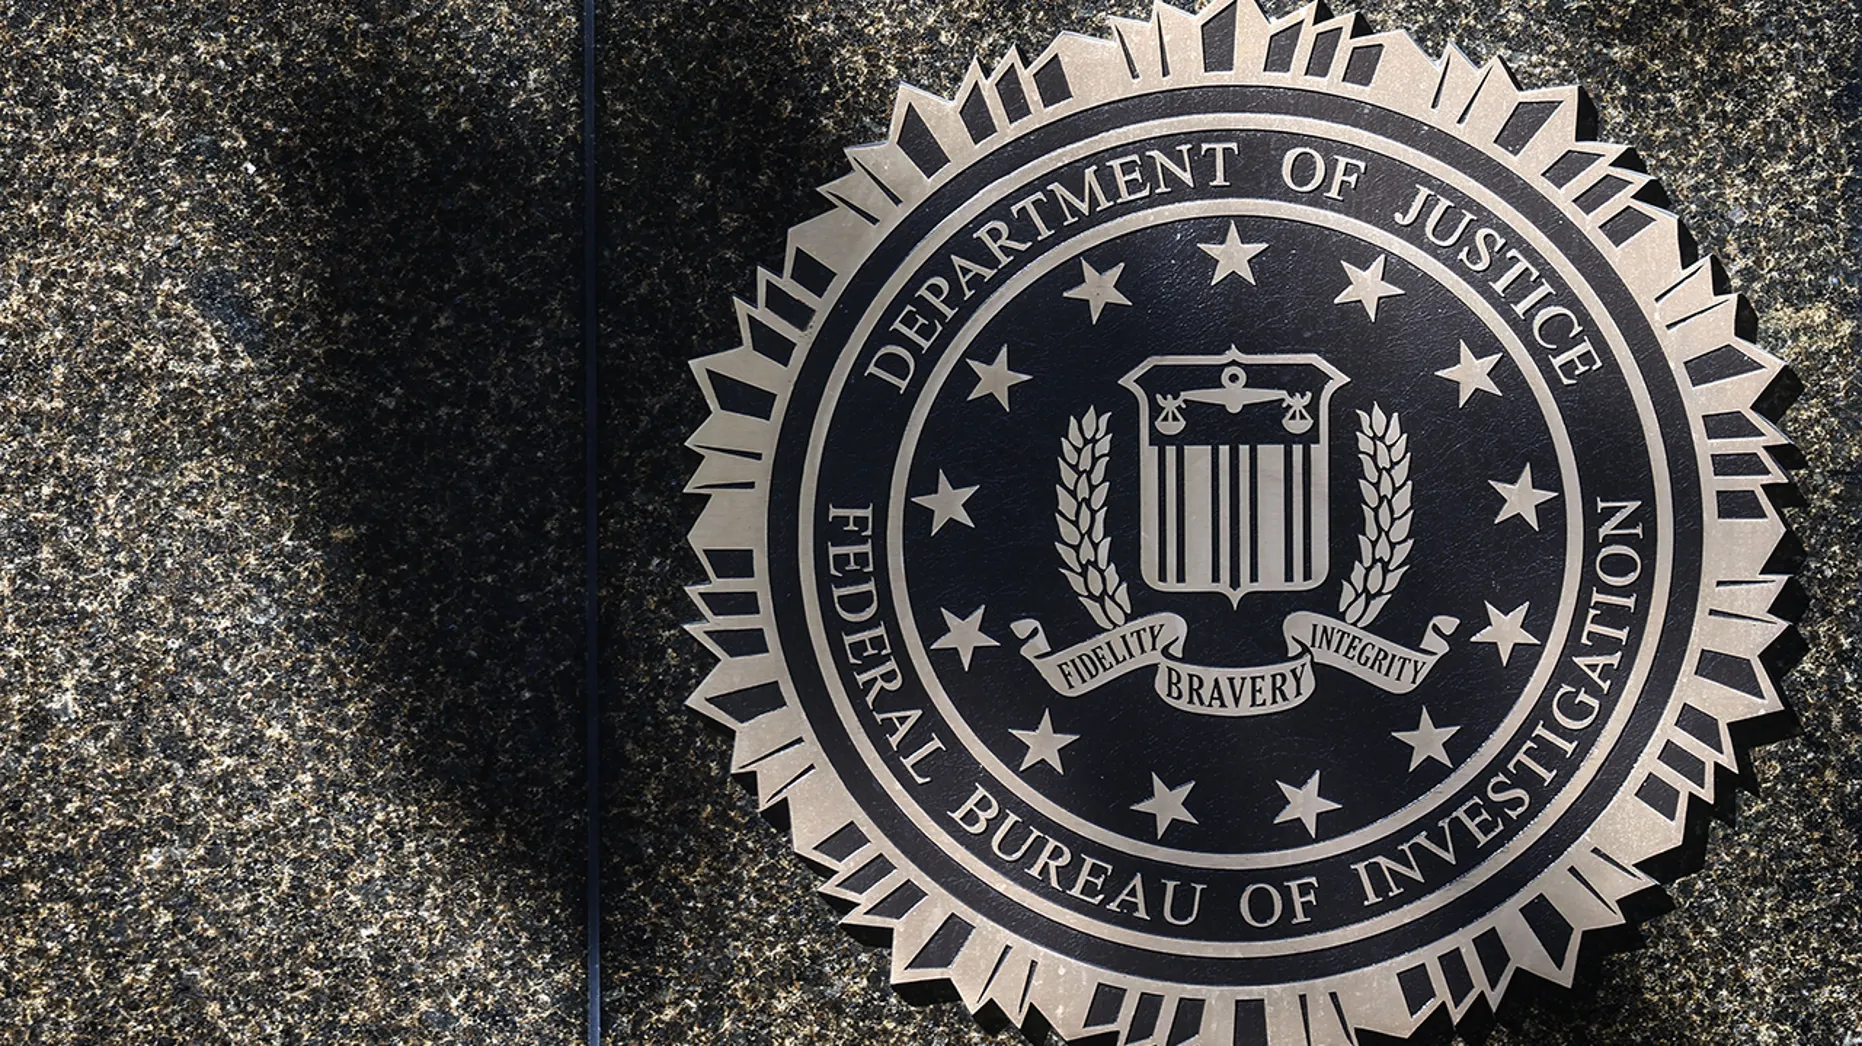 Federal Bureau Of Investigation emblem is seen on the headquarters building in Washington D.C., United States, on October 20, 2022. (Beata Zawrzel/NurPhoto via Getty Images)